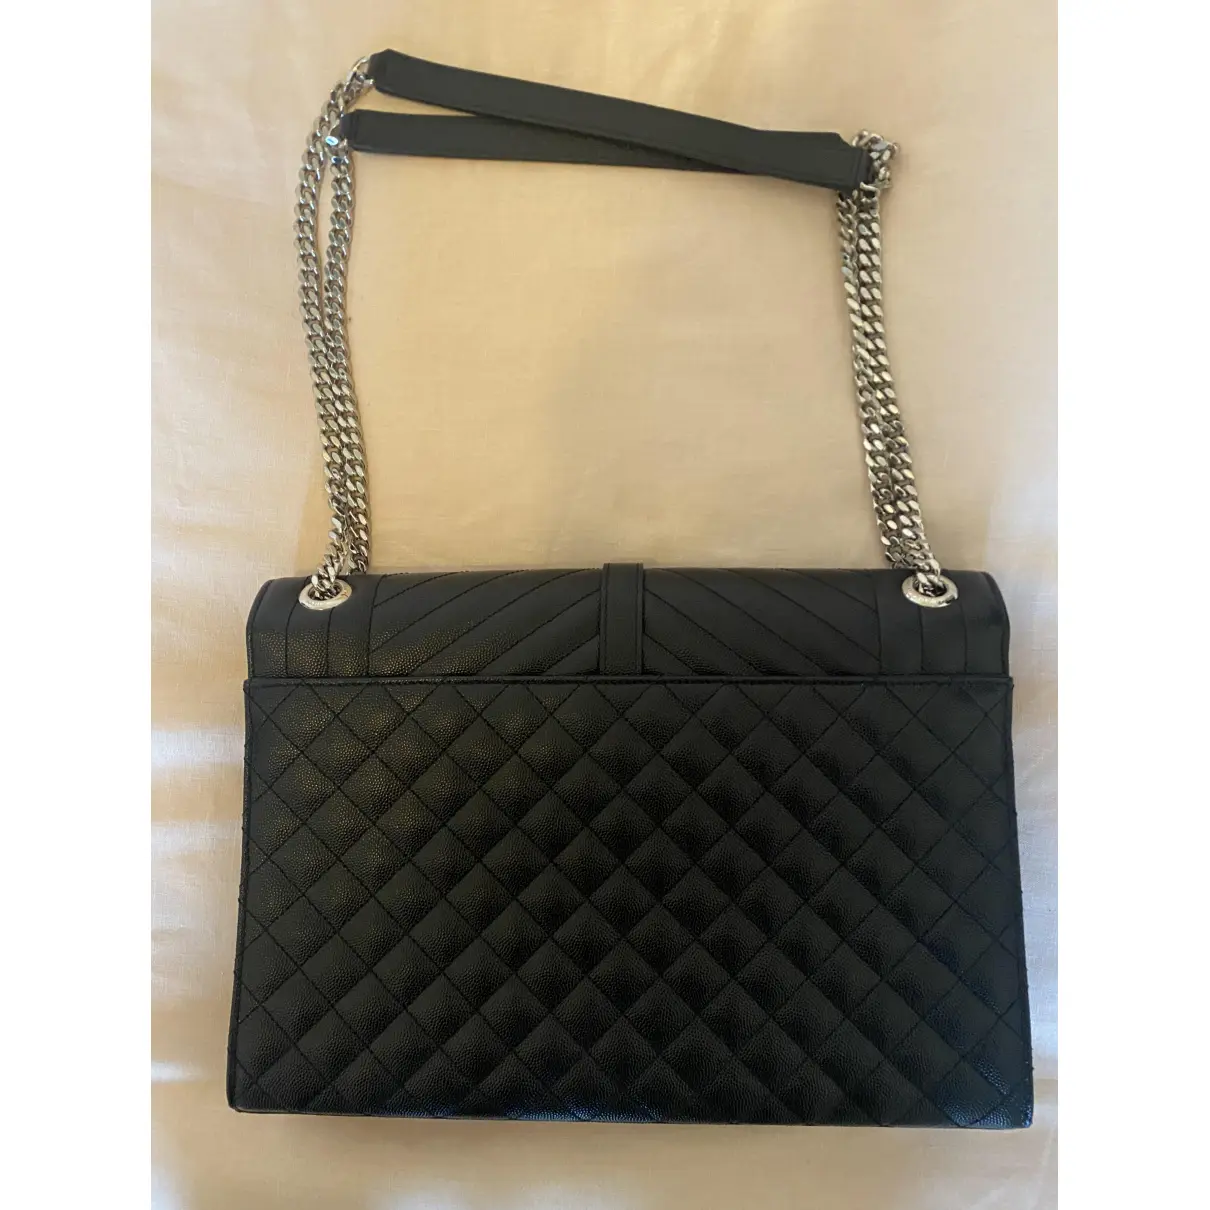 Buy Saint Laurent Envelope leather handbag online